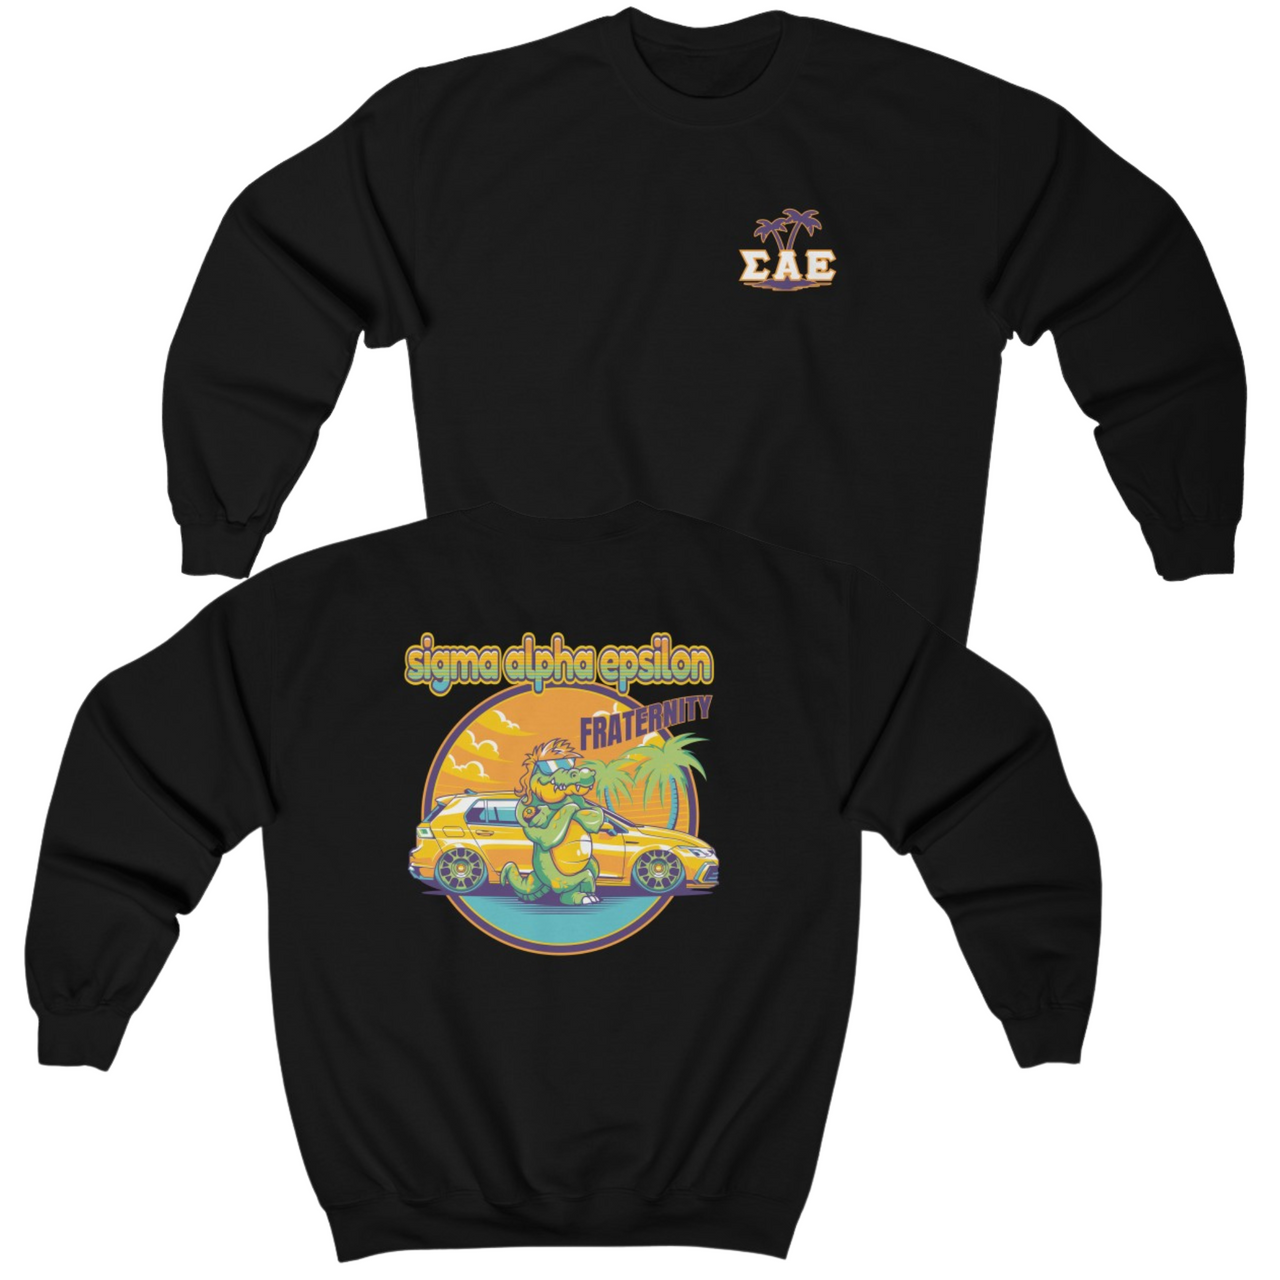 Black Sigma Alpha Epsilon Graphic Crewneck Sweatshirt | Cool Croc | Sigma Alpha Epsilon Clothing and Merchandise